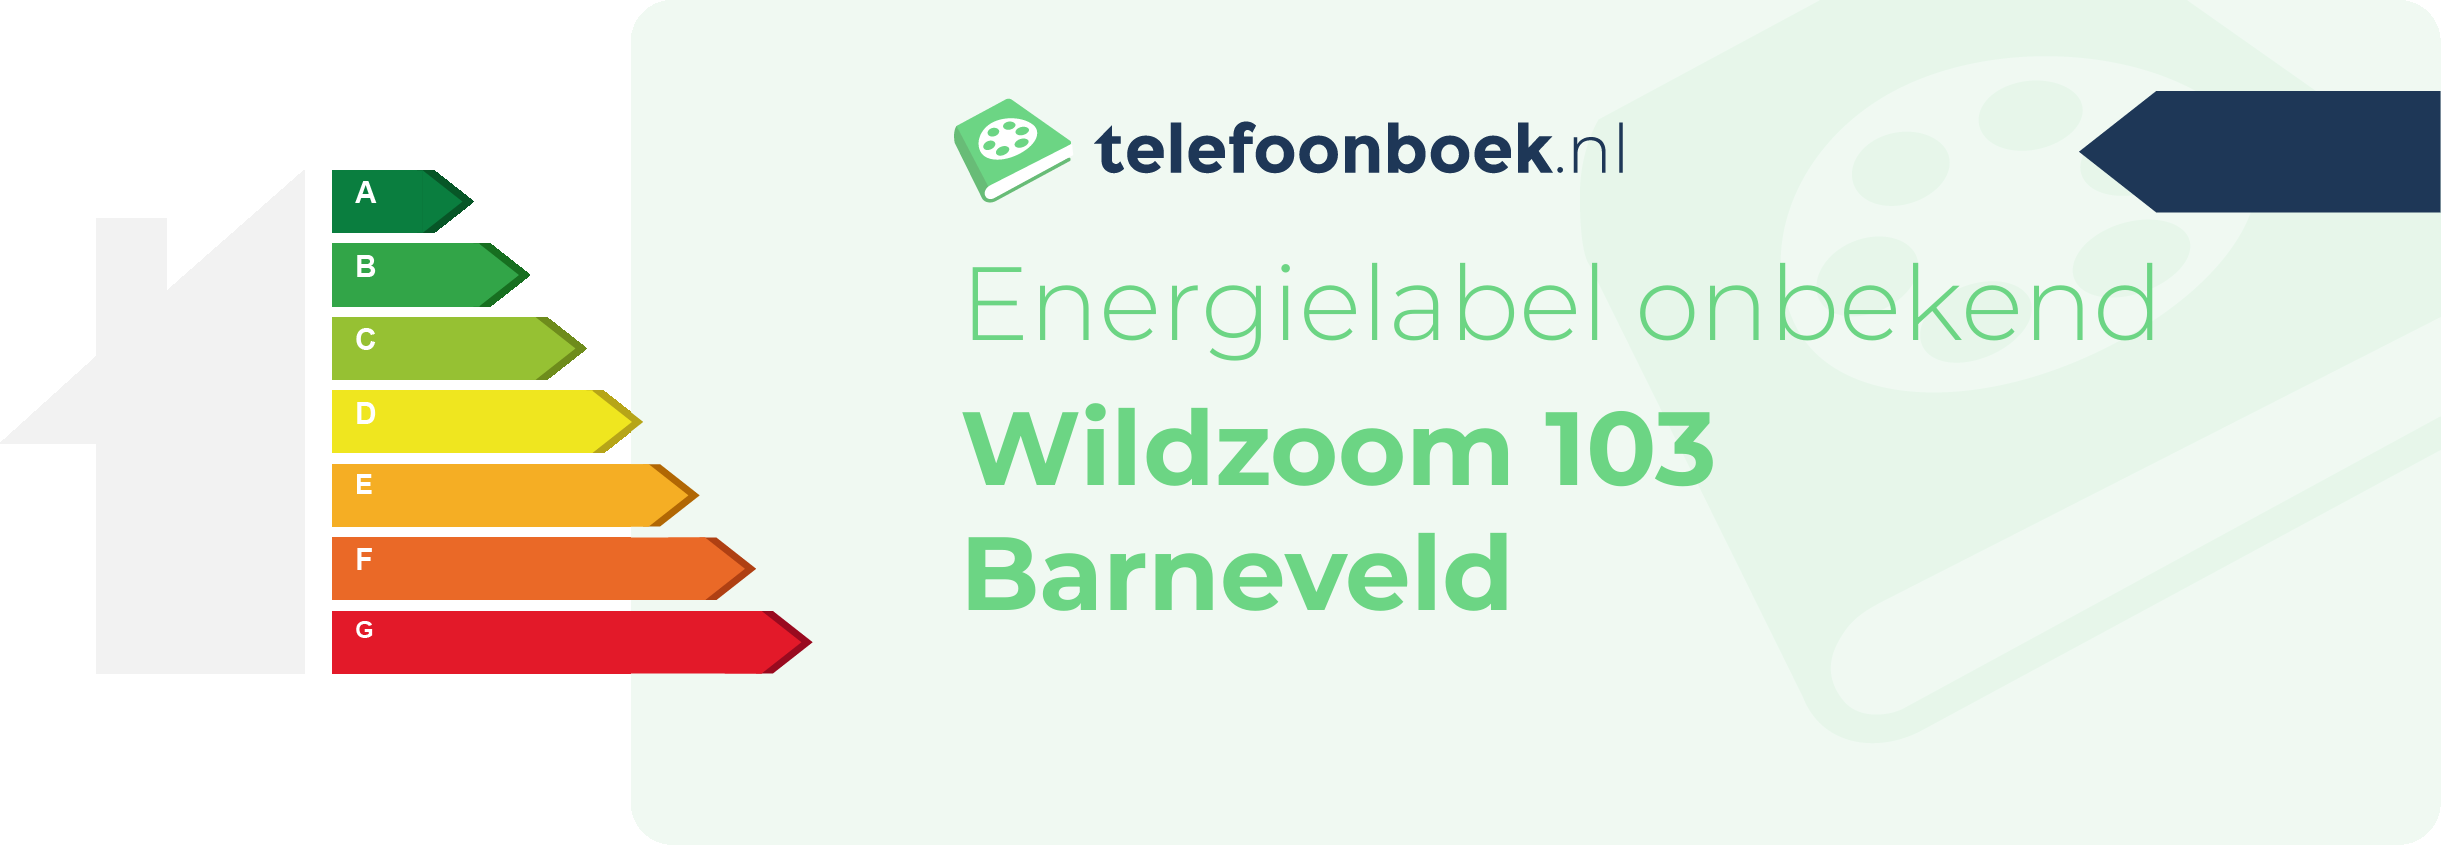 Energielabel Wildzoom 103 Barneveld